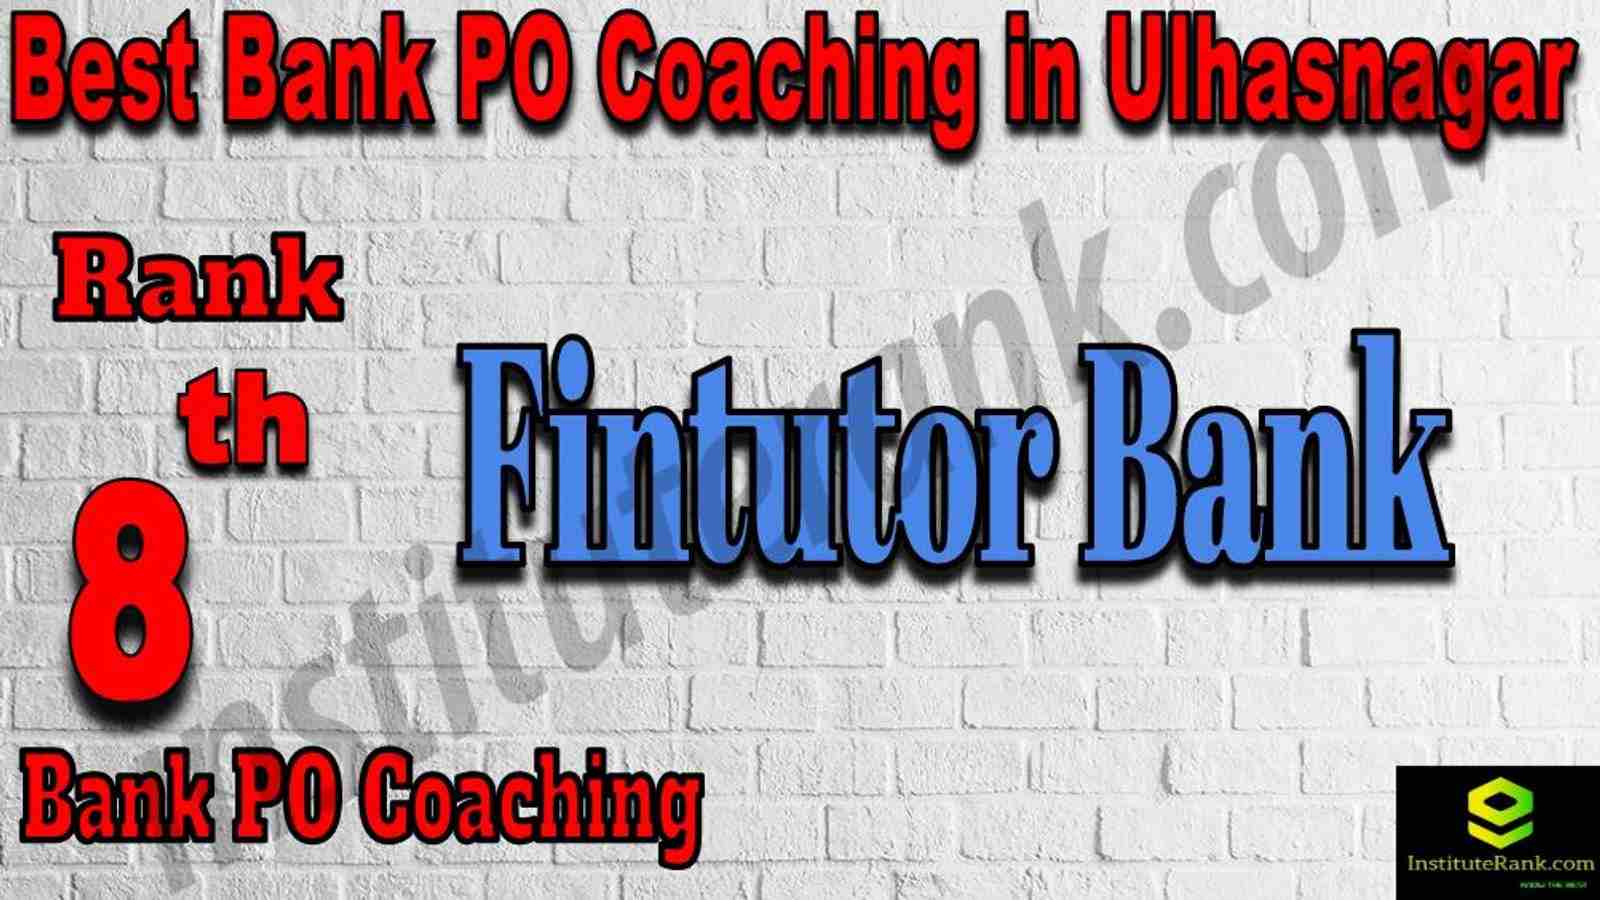 8th Best Bank PO Coaching in Ulhasnagar